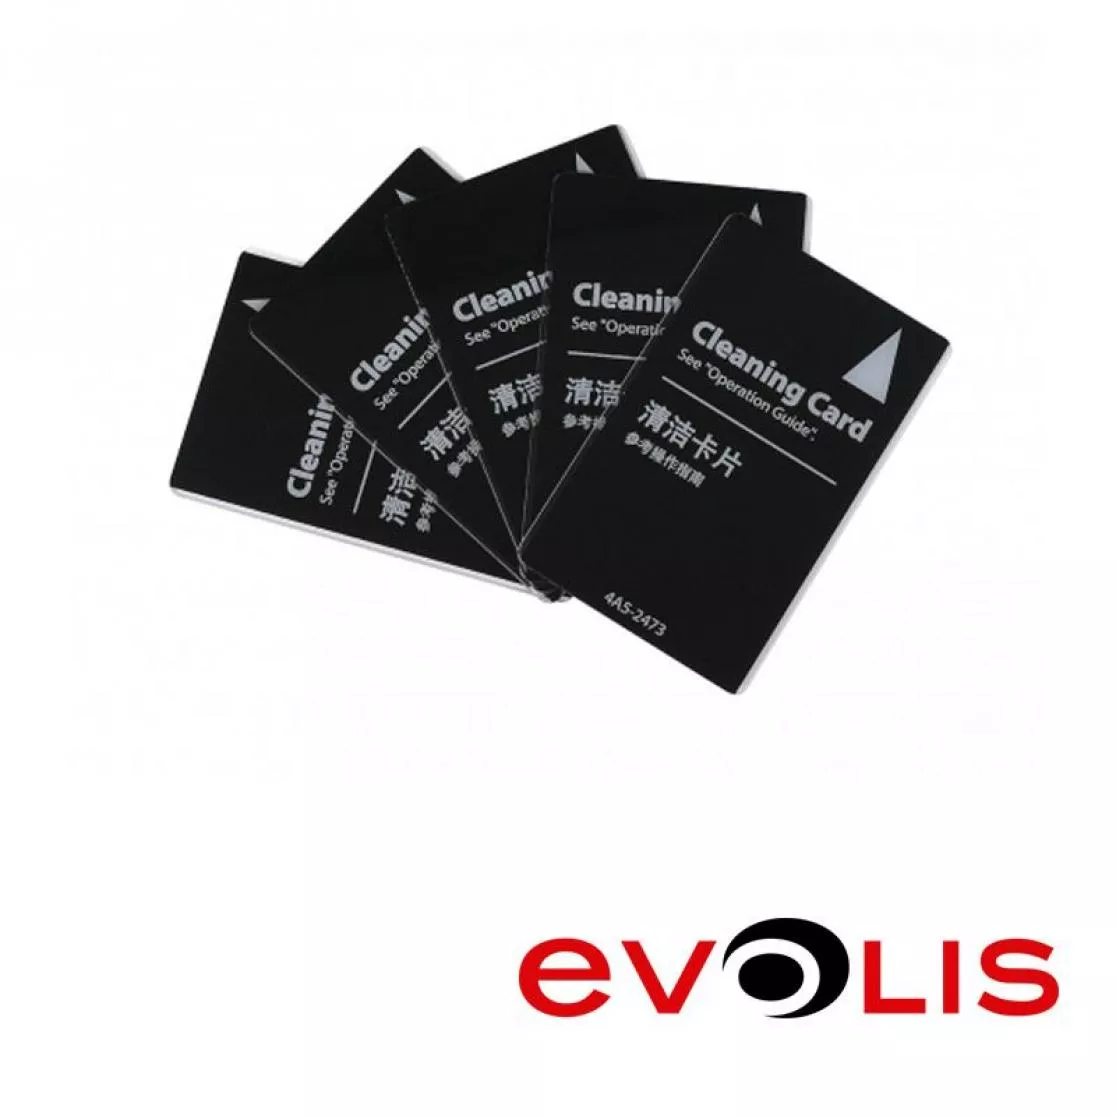 Evolis Avanisa cleaning cards